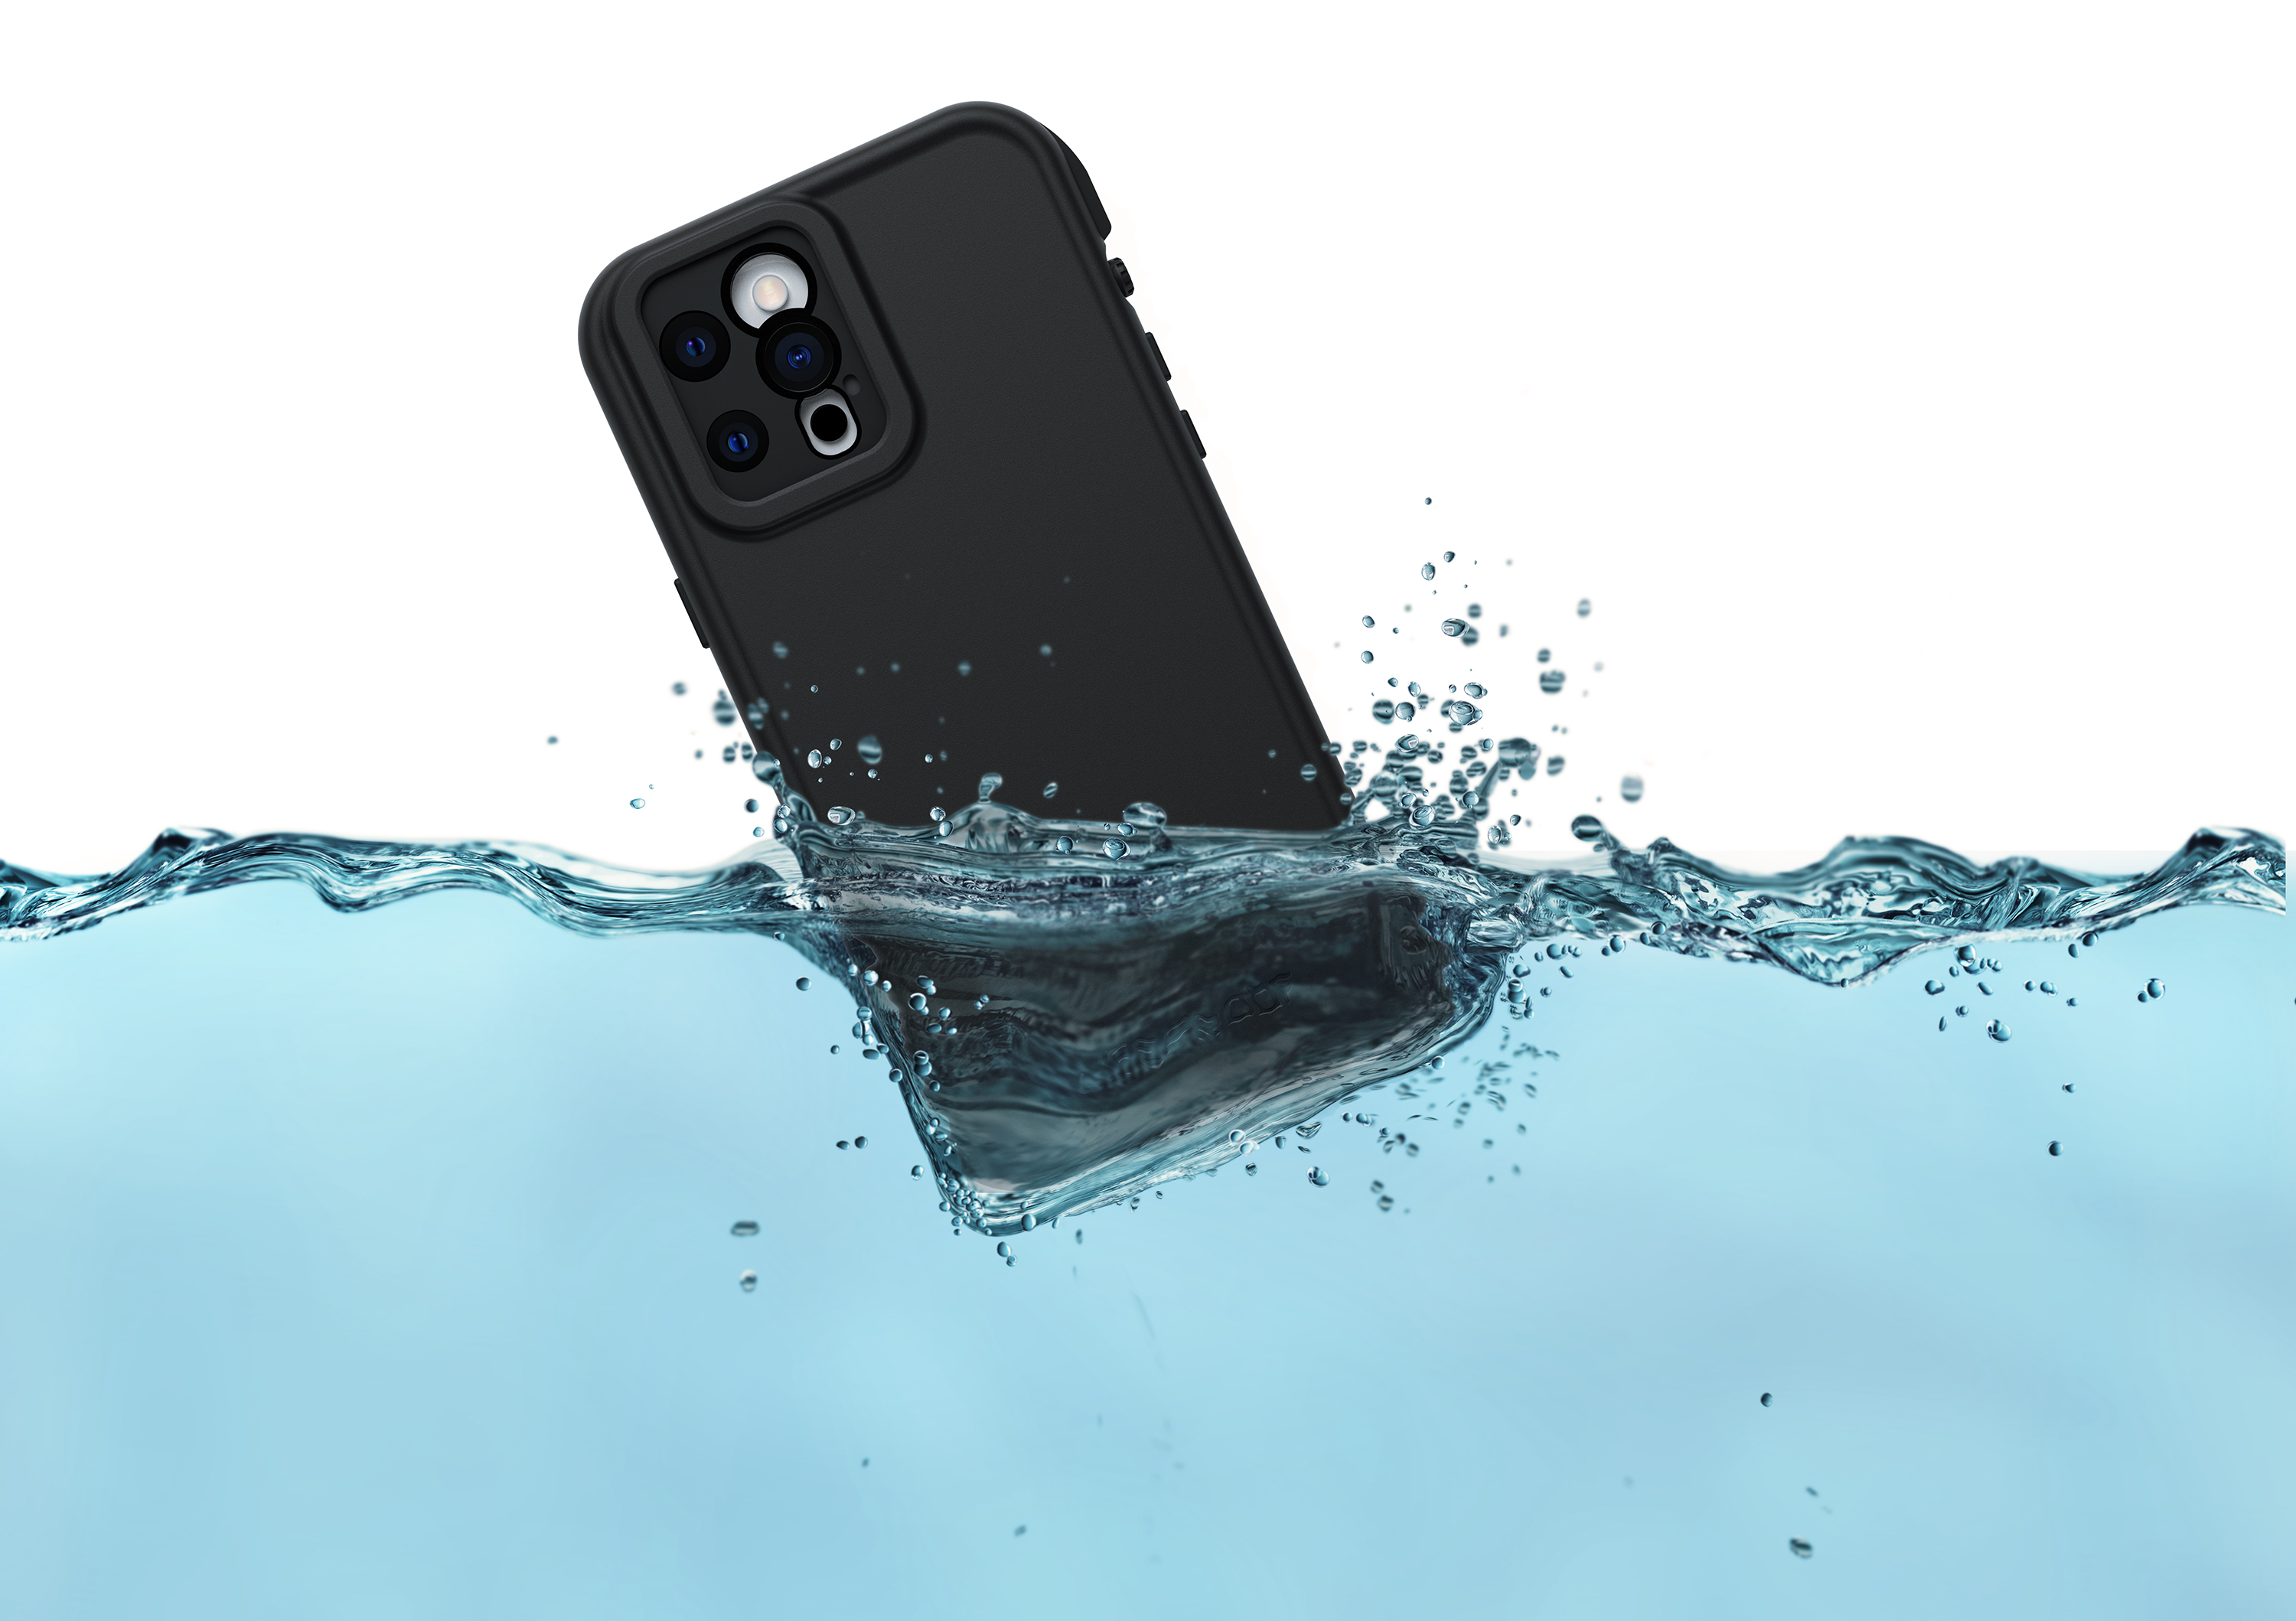 LifeProof iPhone 12 Pro Max Fre Case - Black